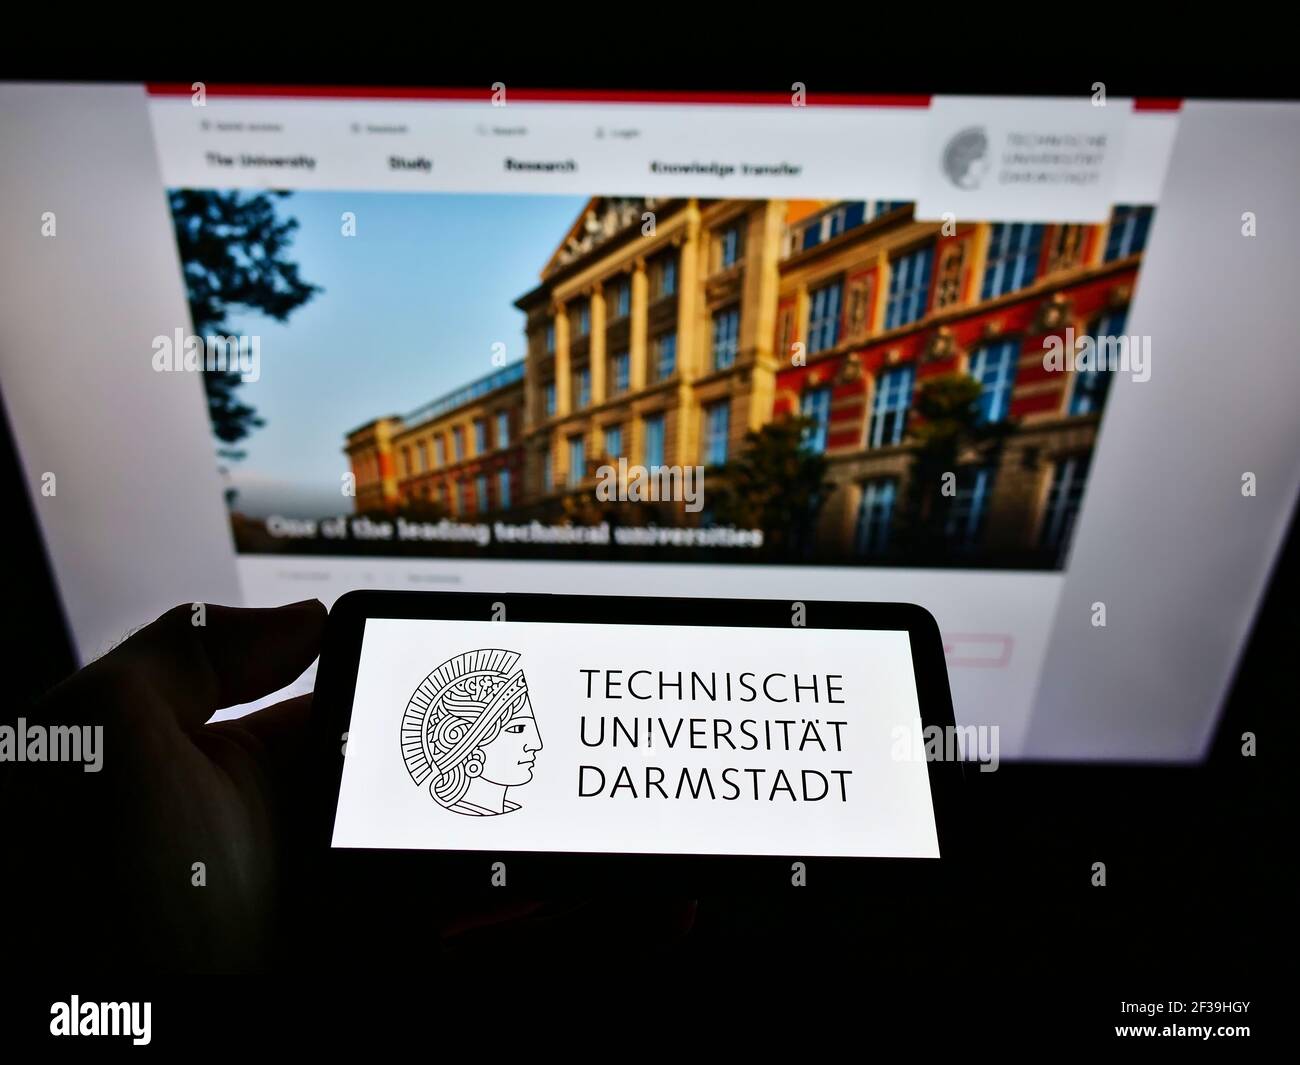 Person holding smartphone with logo of German university Technische Universität Darmstadt on screen in front of website. Focus on phone display. Stock Photo